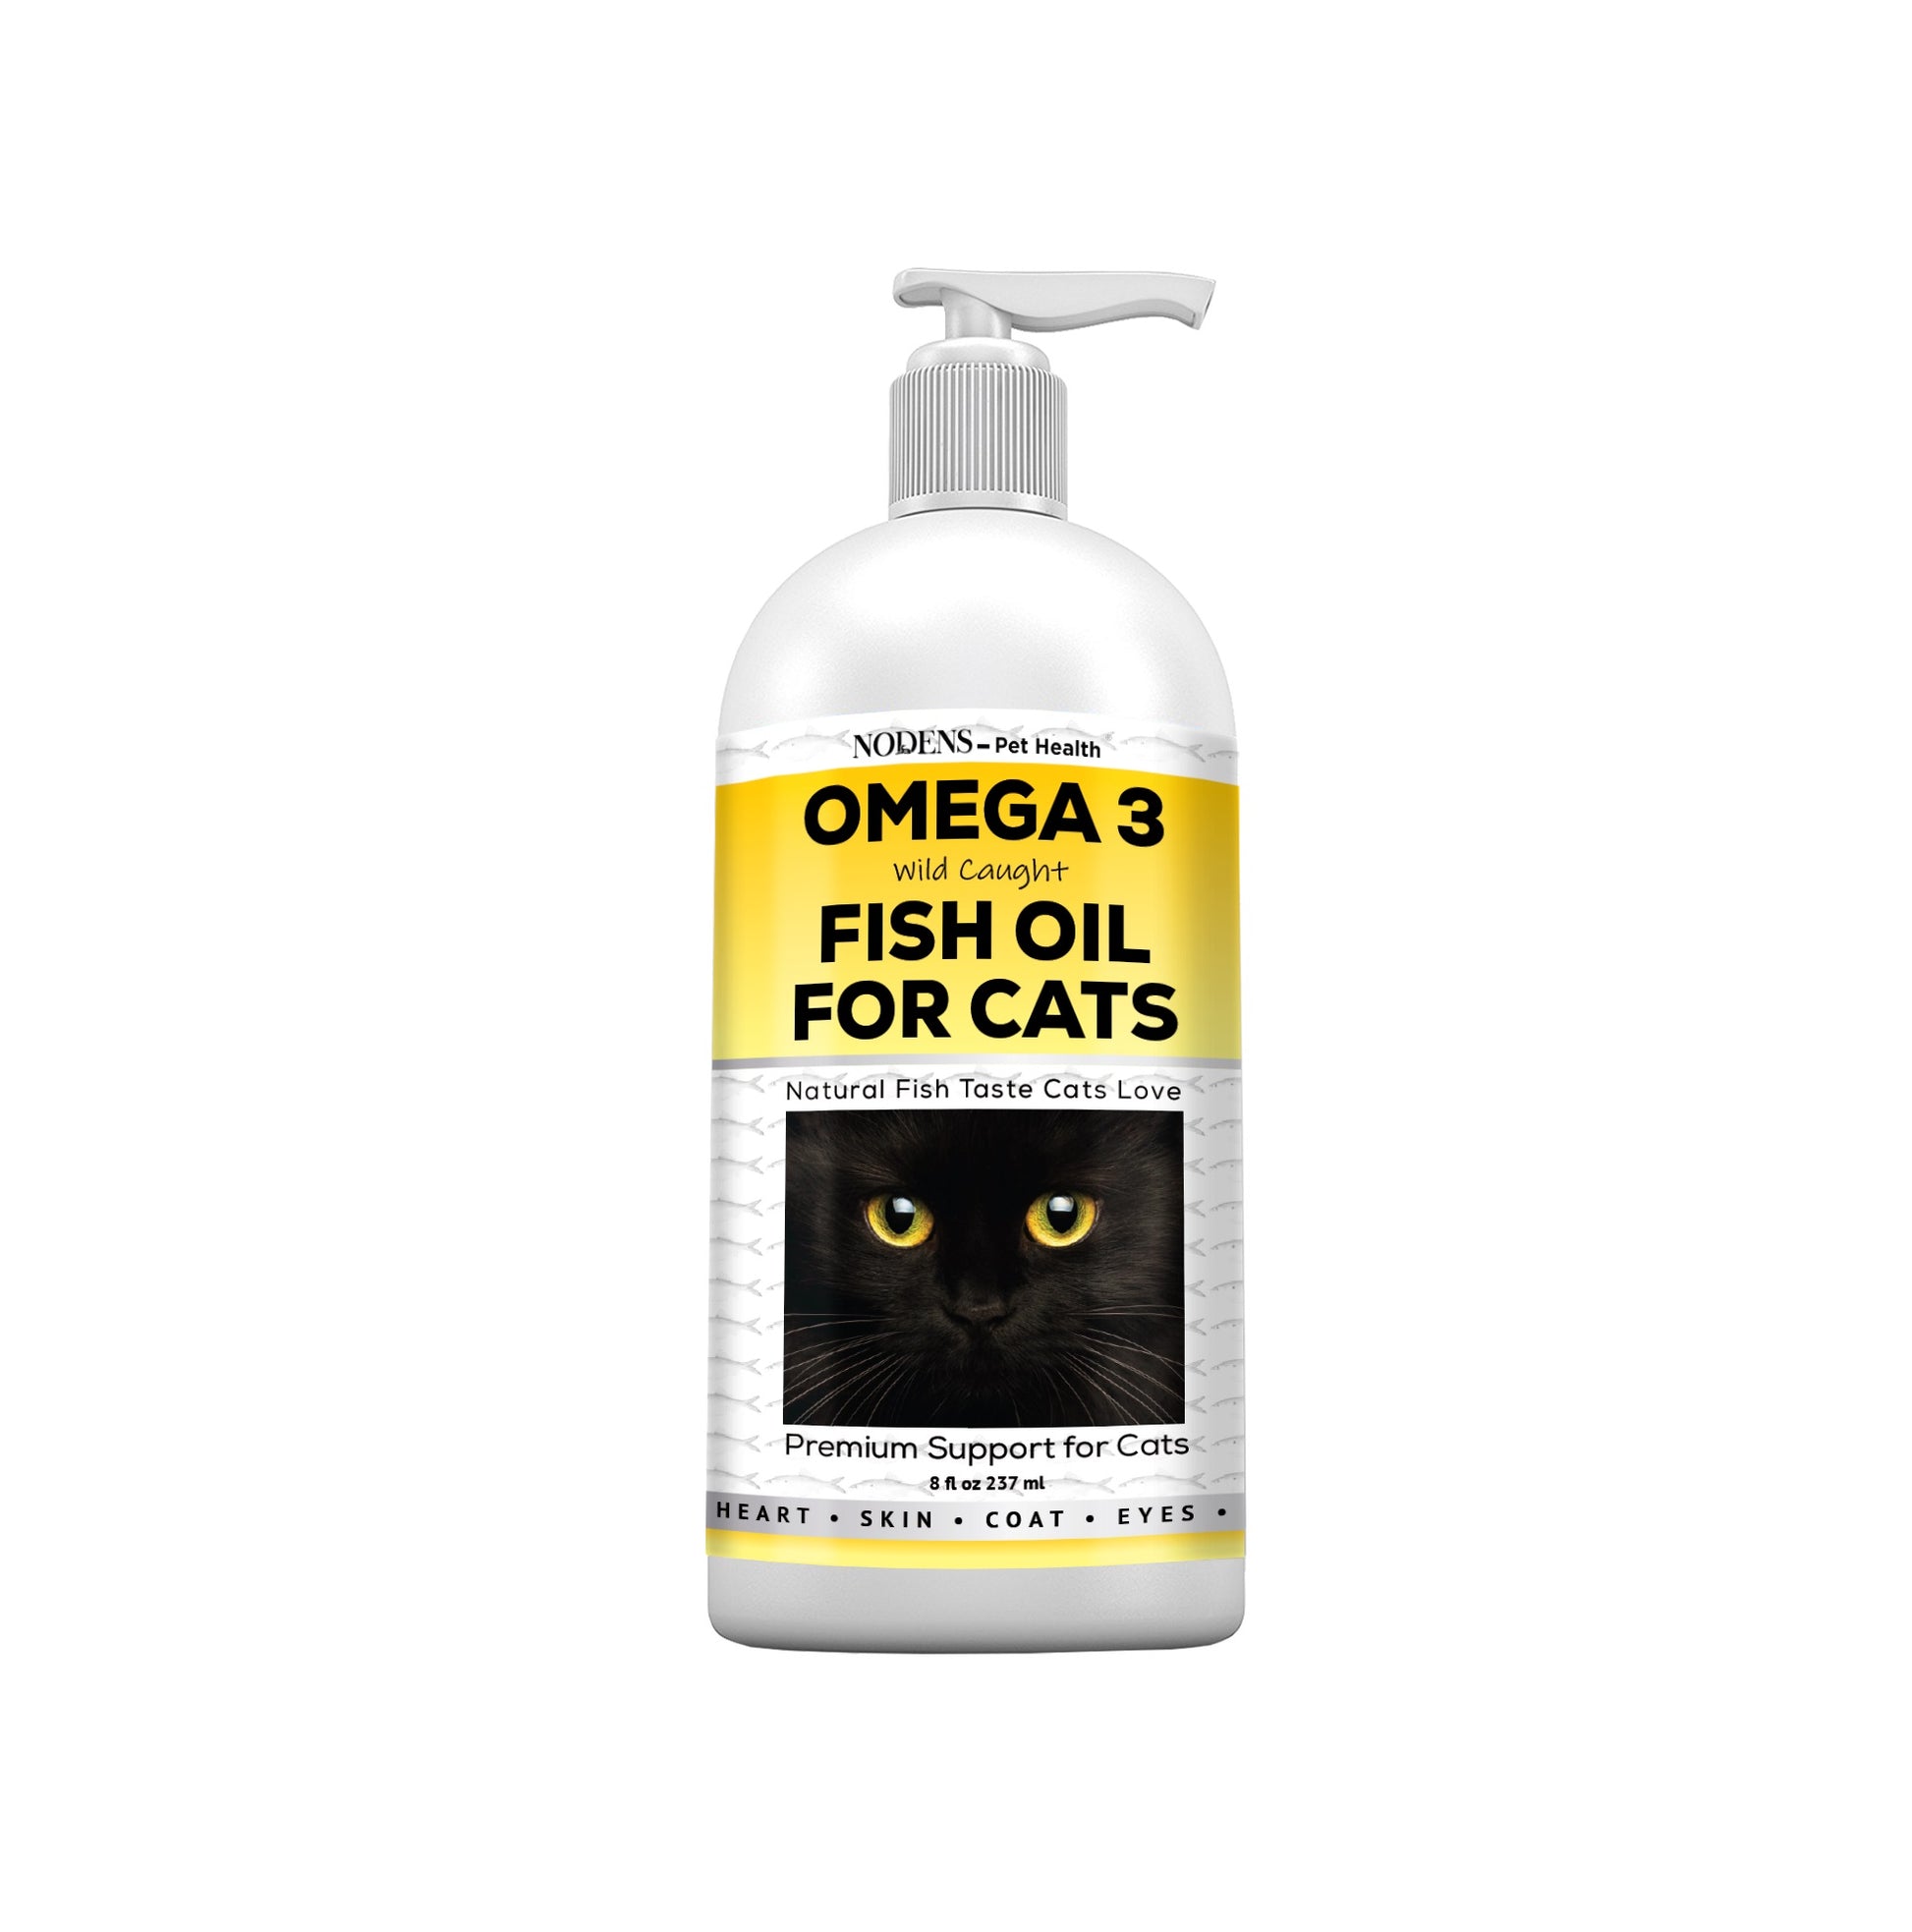 Nodens wild caught Omega 3 Fish Oil